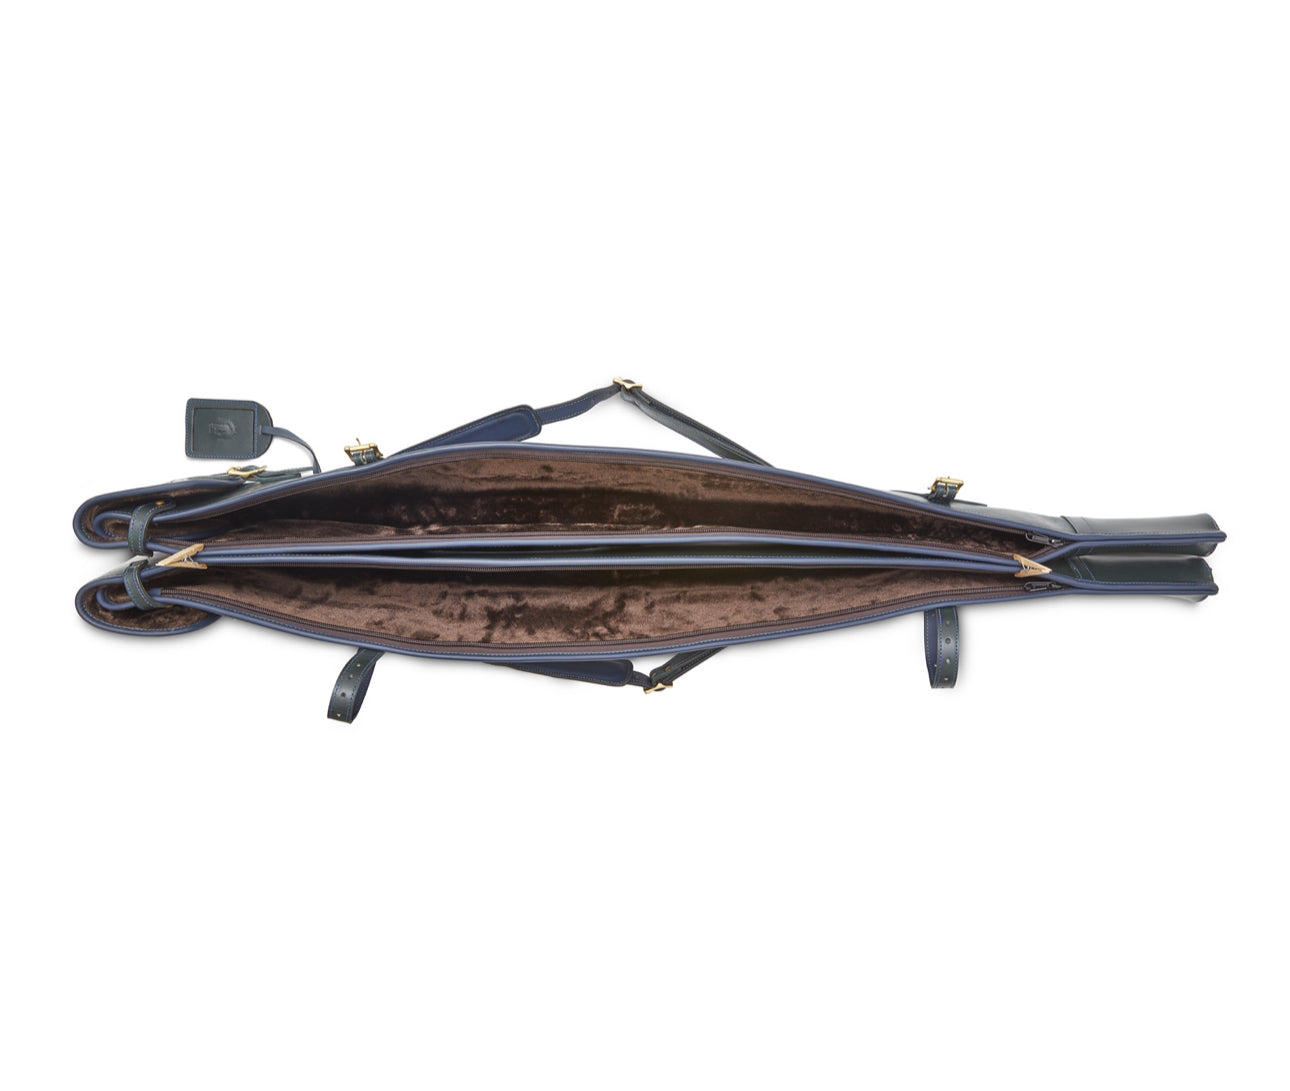 Bridle Leather Single Gun Slip - Sheepskin Lined In Dark Brown